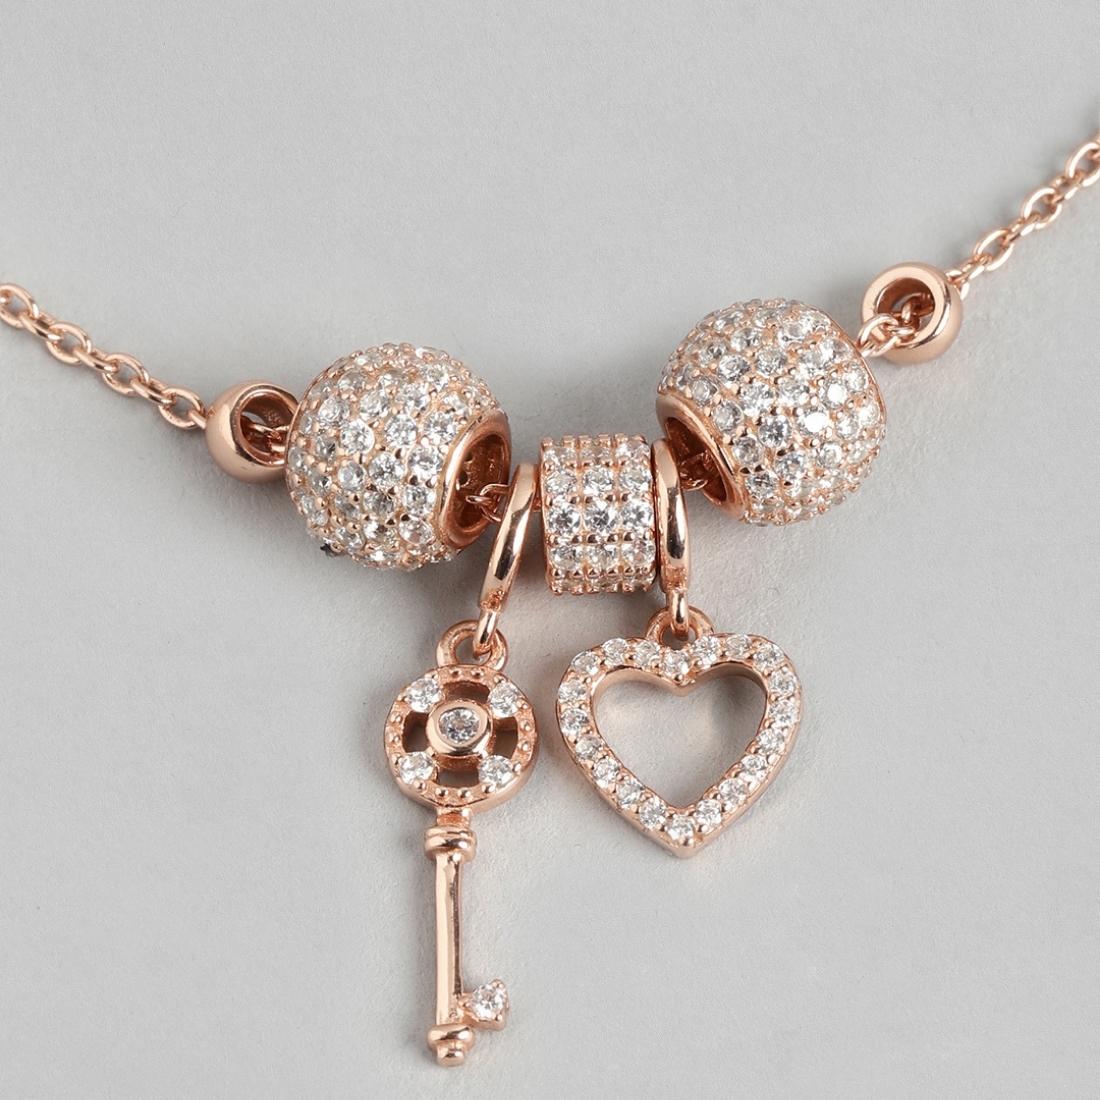 Key to the Heart 925 Silver Bracelet